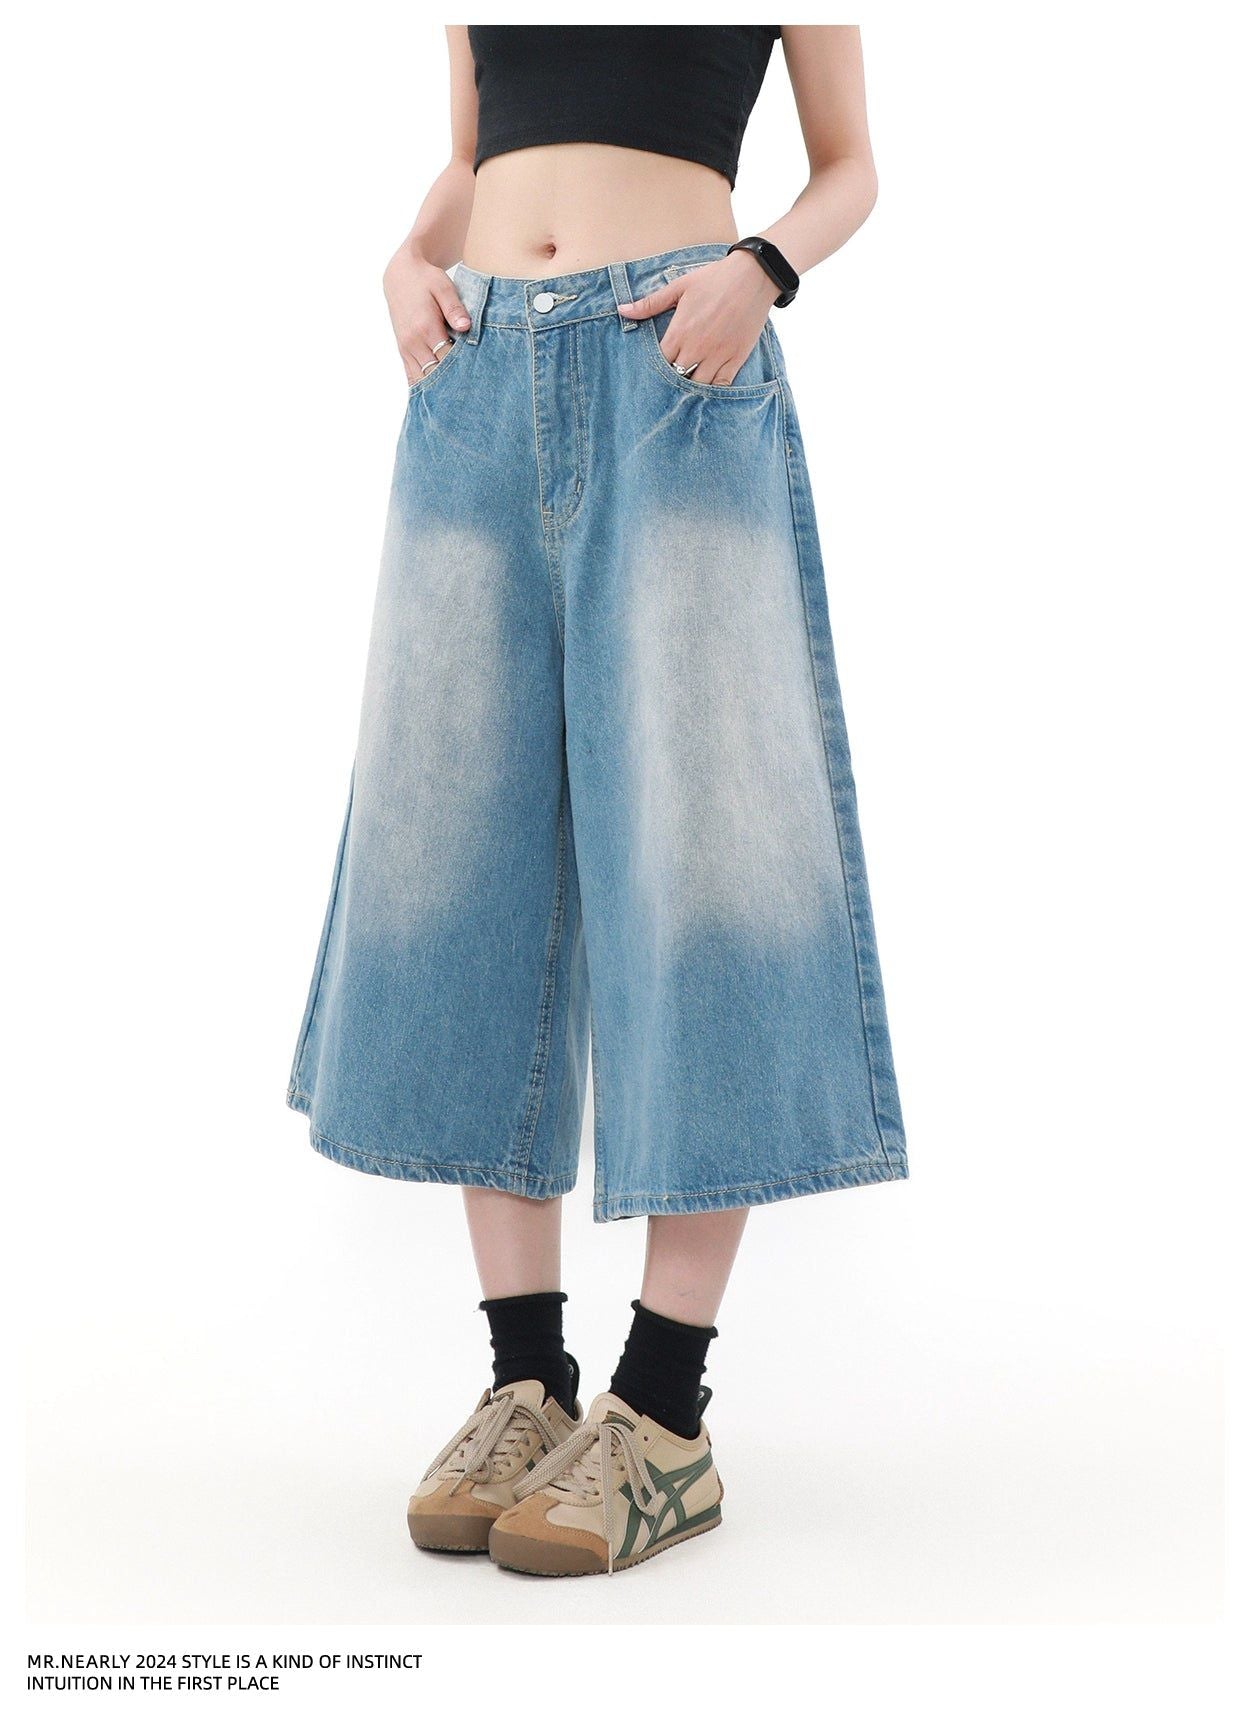 Faded Lightning Crack Denim Shorts Korean Street Fashion Shorts By Mr Nearly Shop Online at OH Vault